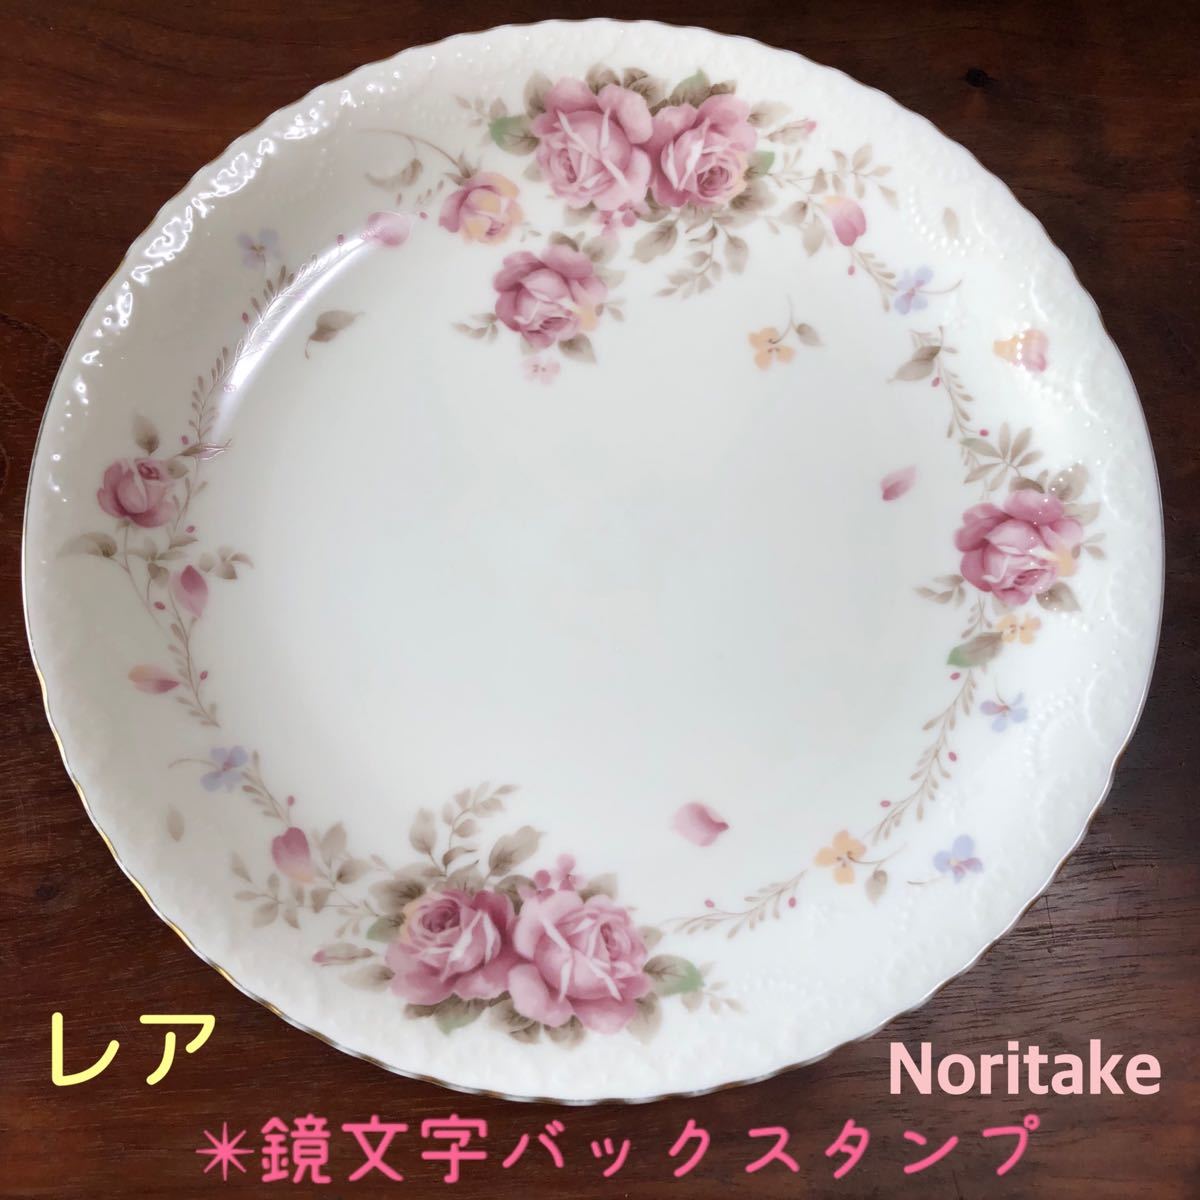 Noritake＊ レア オールドノリタケ コンテンポラリー 大皿 プレート - mytsoluciones.com